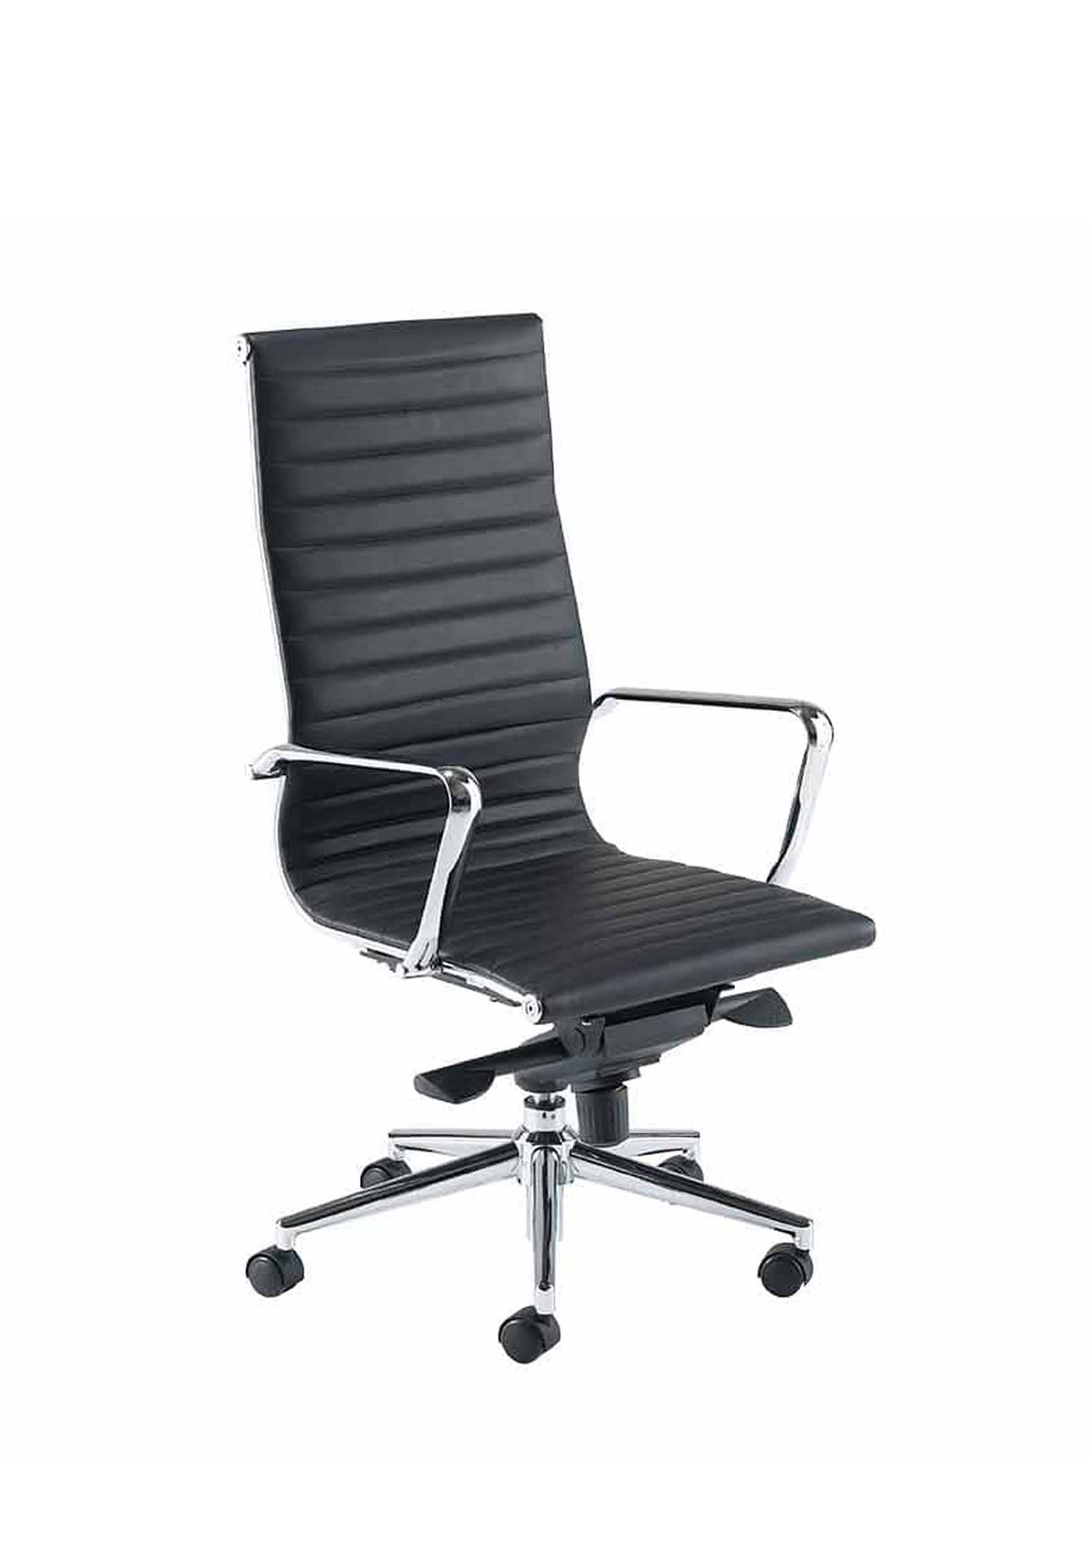 ARIA - AH1 Black Leather High Back Operator Chair